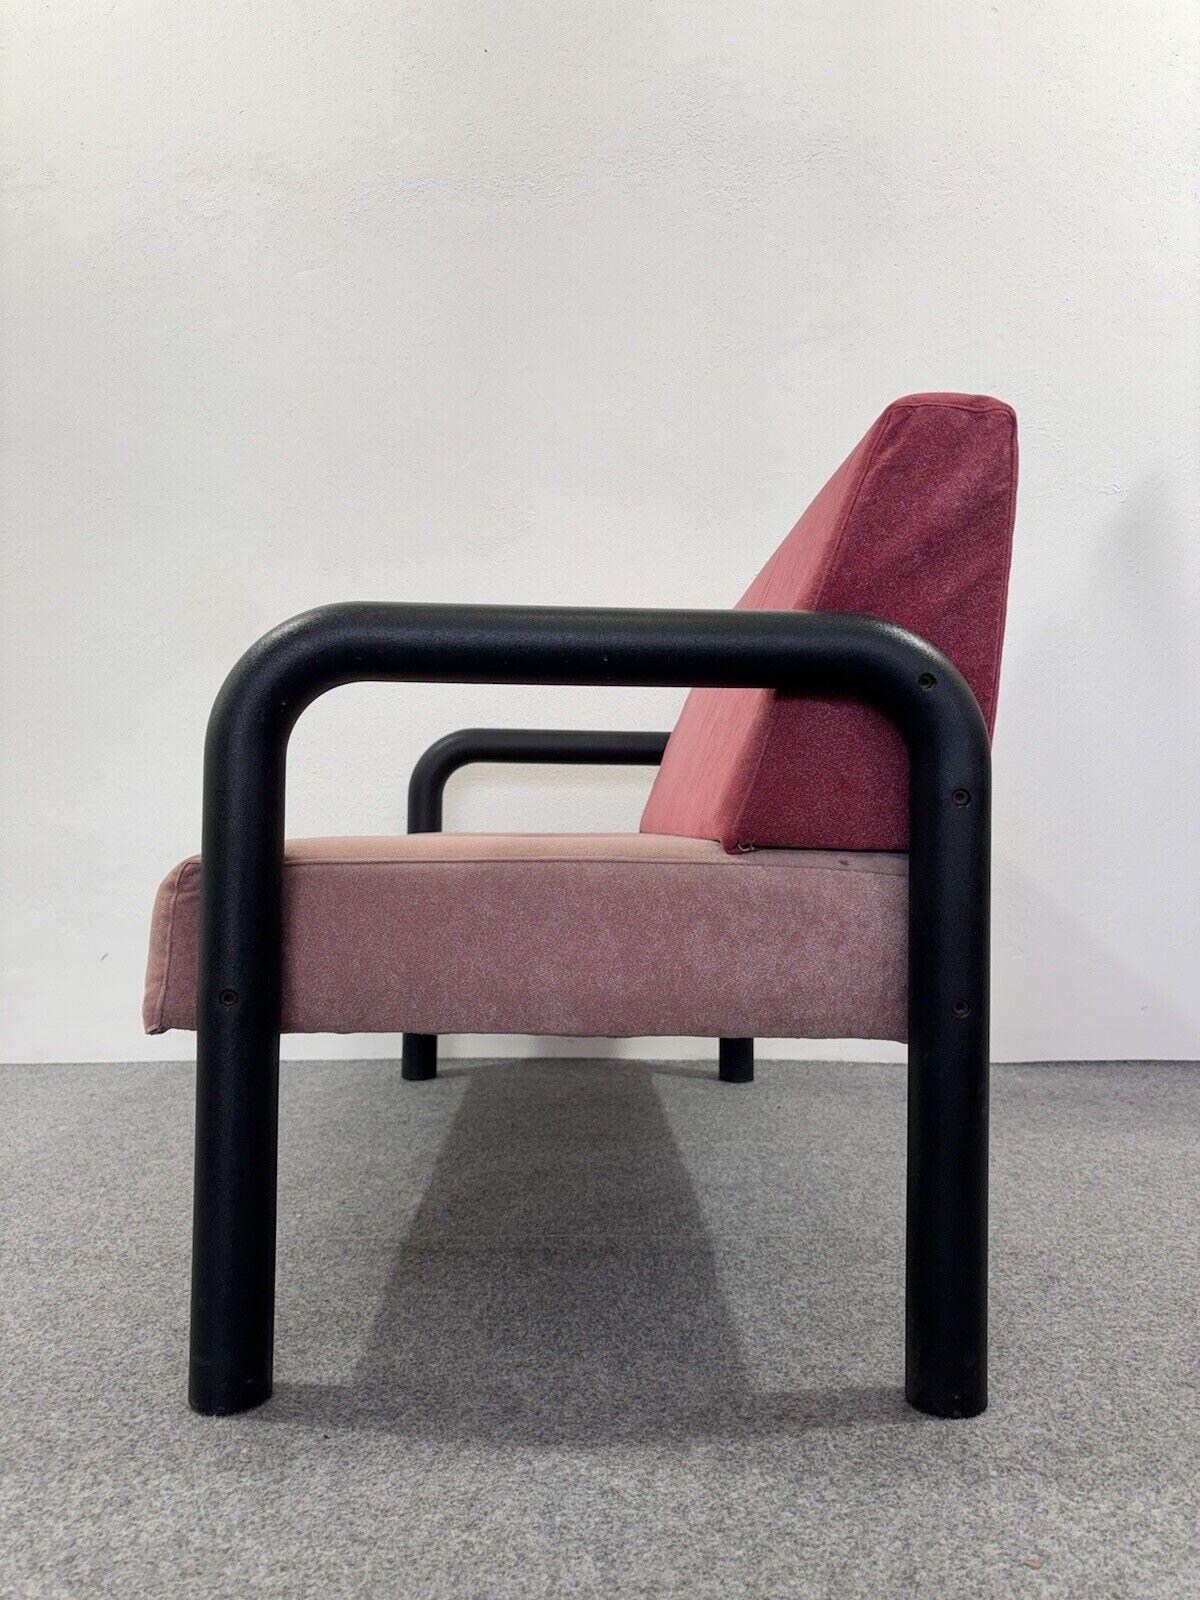 Italian Memphis Style Two Seater Sofa Design Postmodern Modernism 1980s For Sale